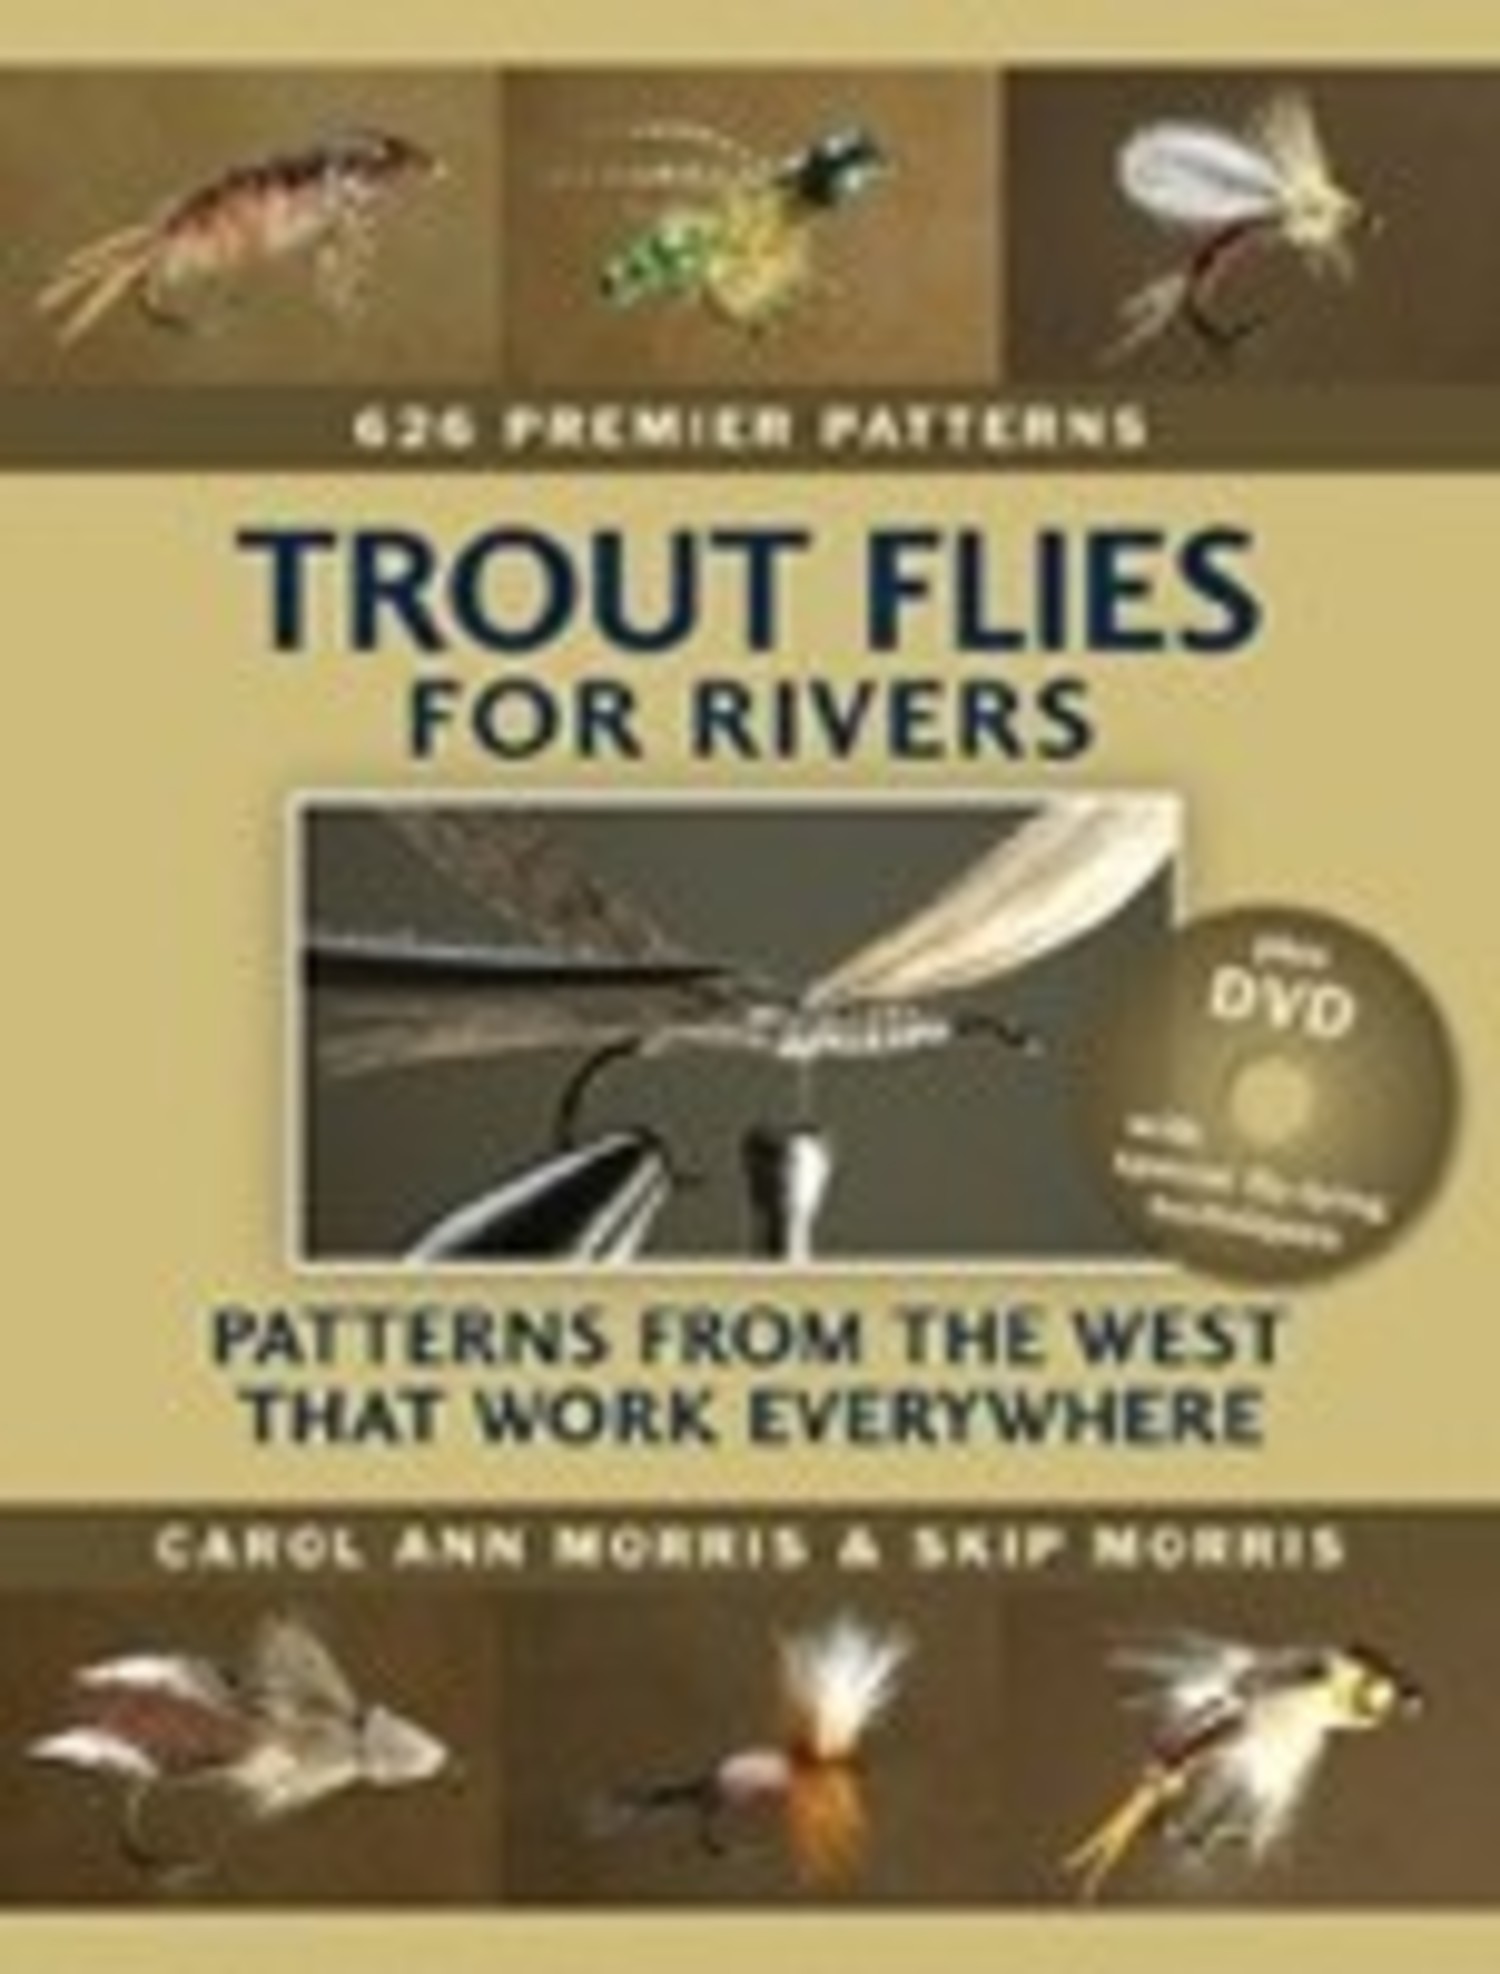 Trout Flies for Rivers by Carol & Skip Morris - Royal Treatment